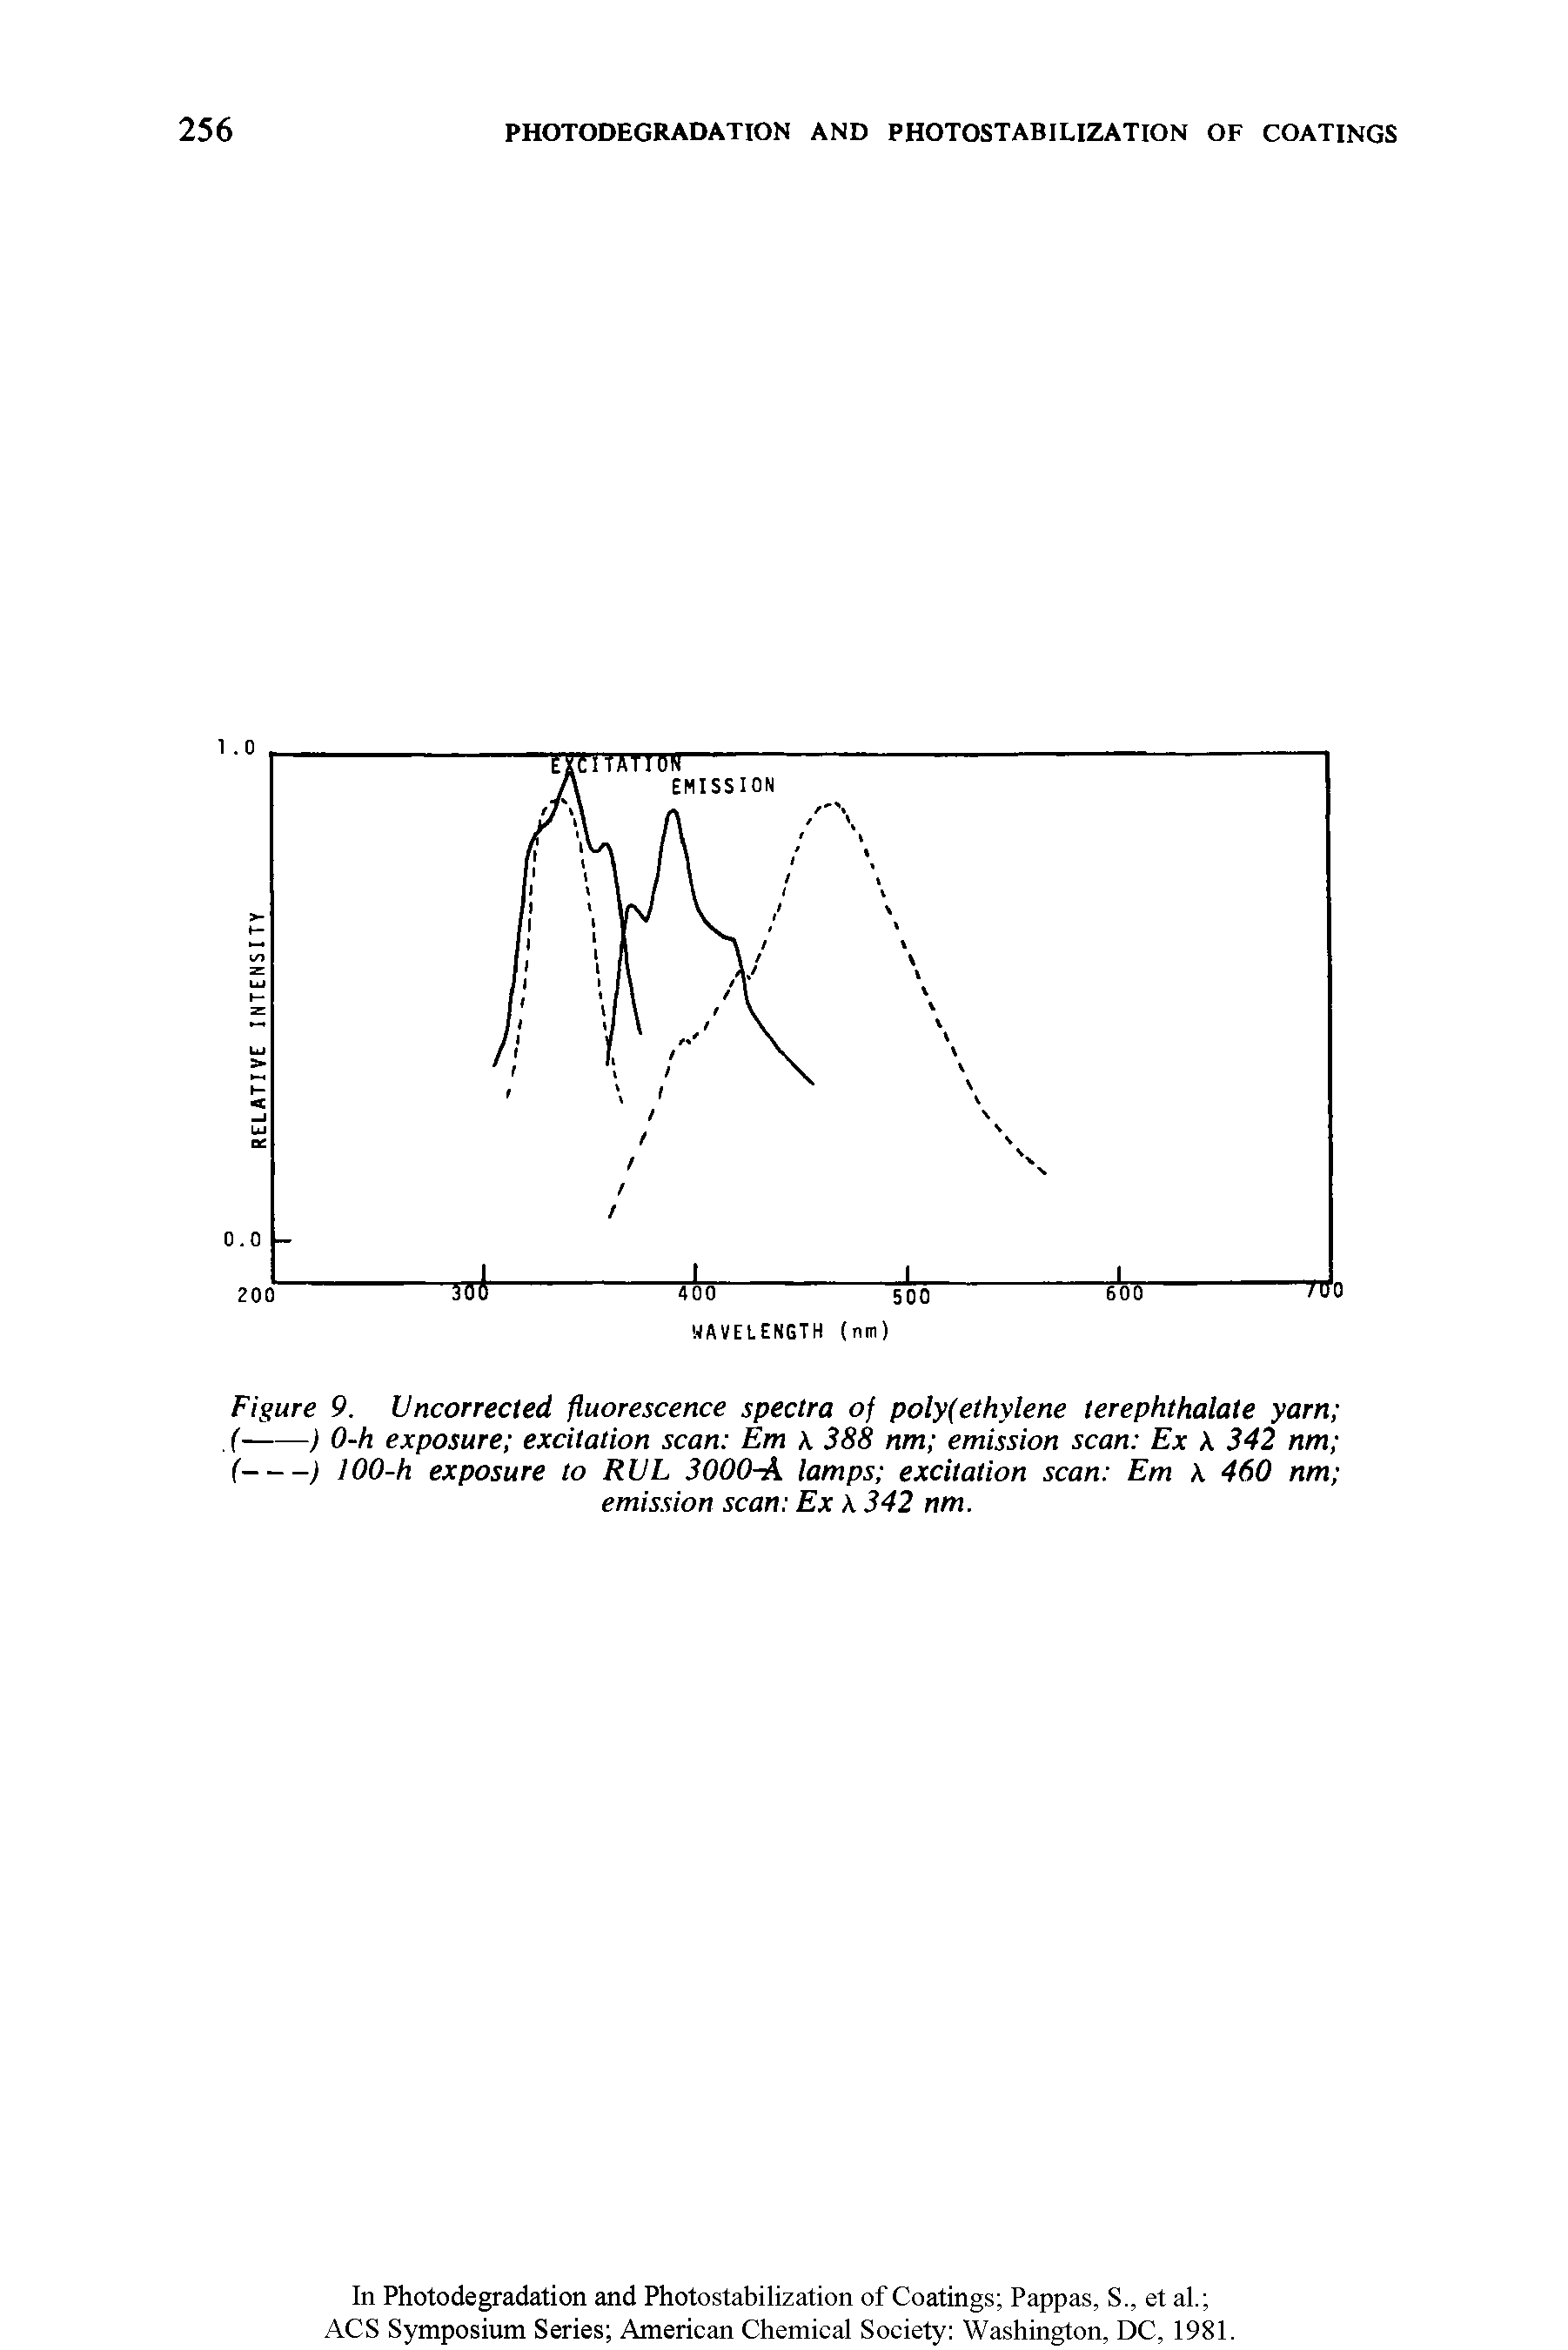 Figure 9. Uncorrected fluorescence spectra of polyfethylene terephthalate yarn ...